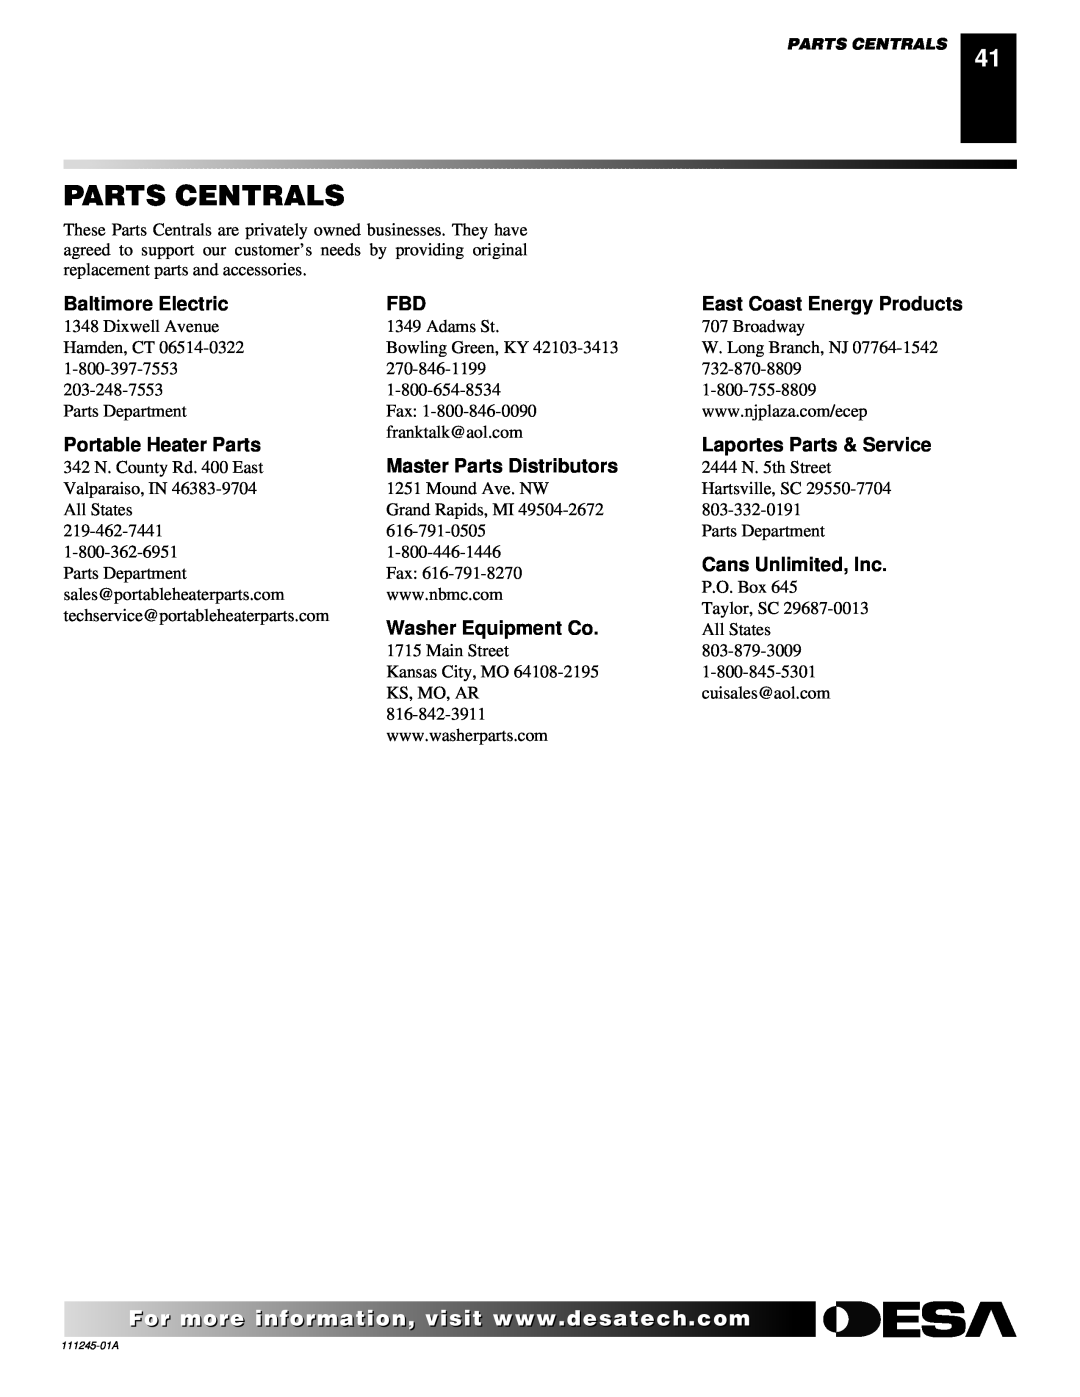 Desa CGEFP33NRB Parts Centrals, Baltimore Electric, Portable Heater Parts, Laportes Parts & Service, Cans Unlimited, Inc 